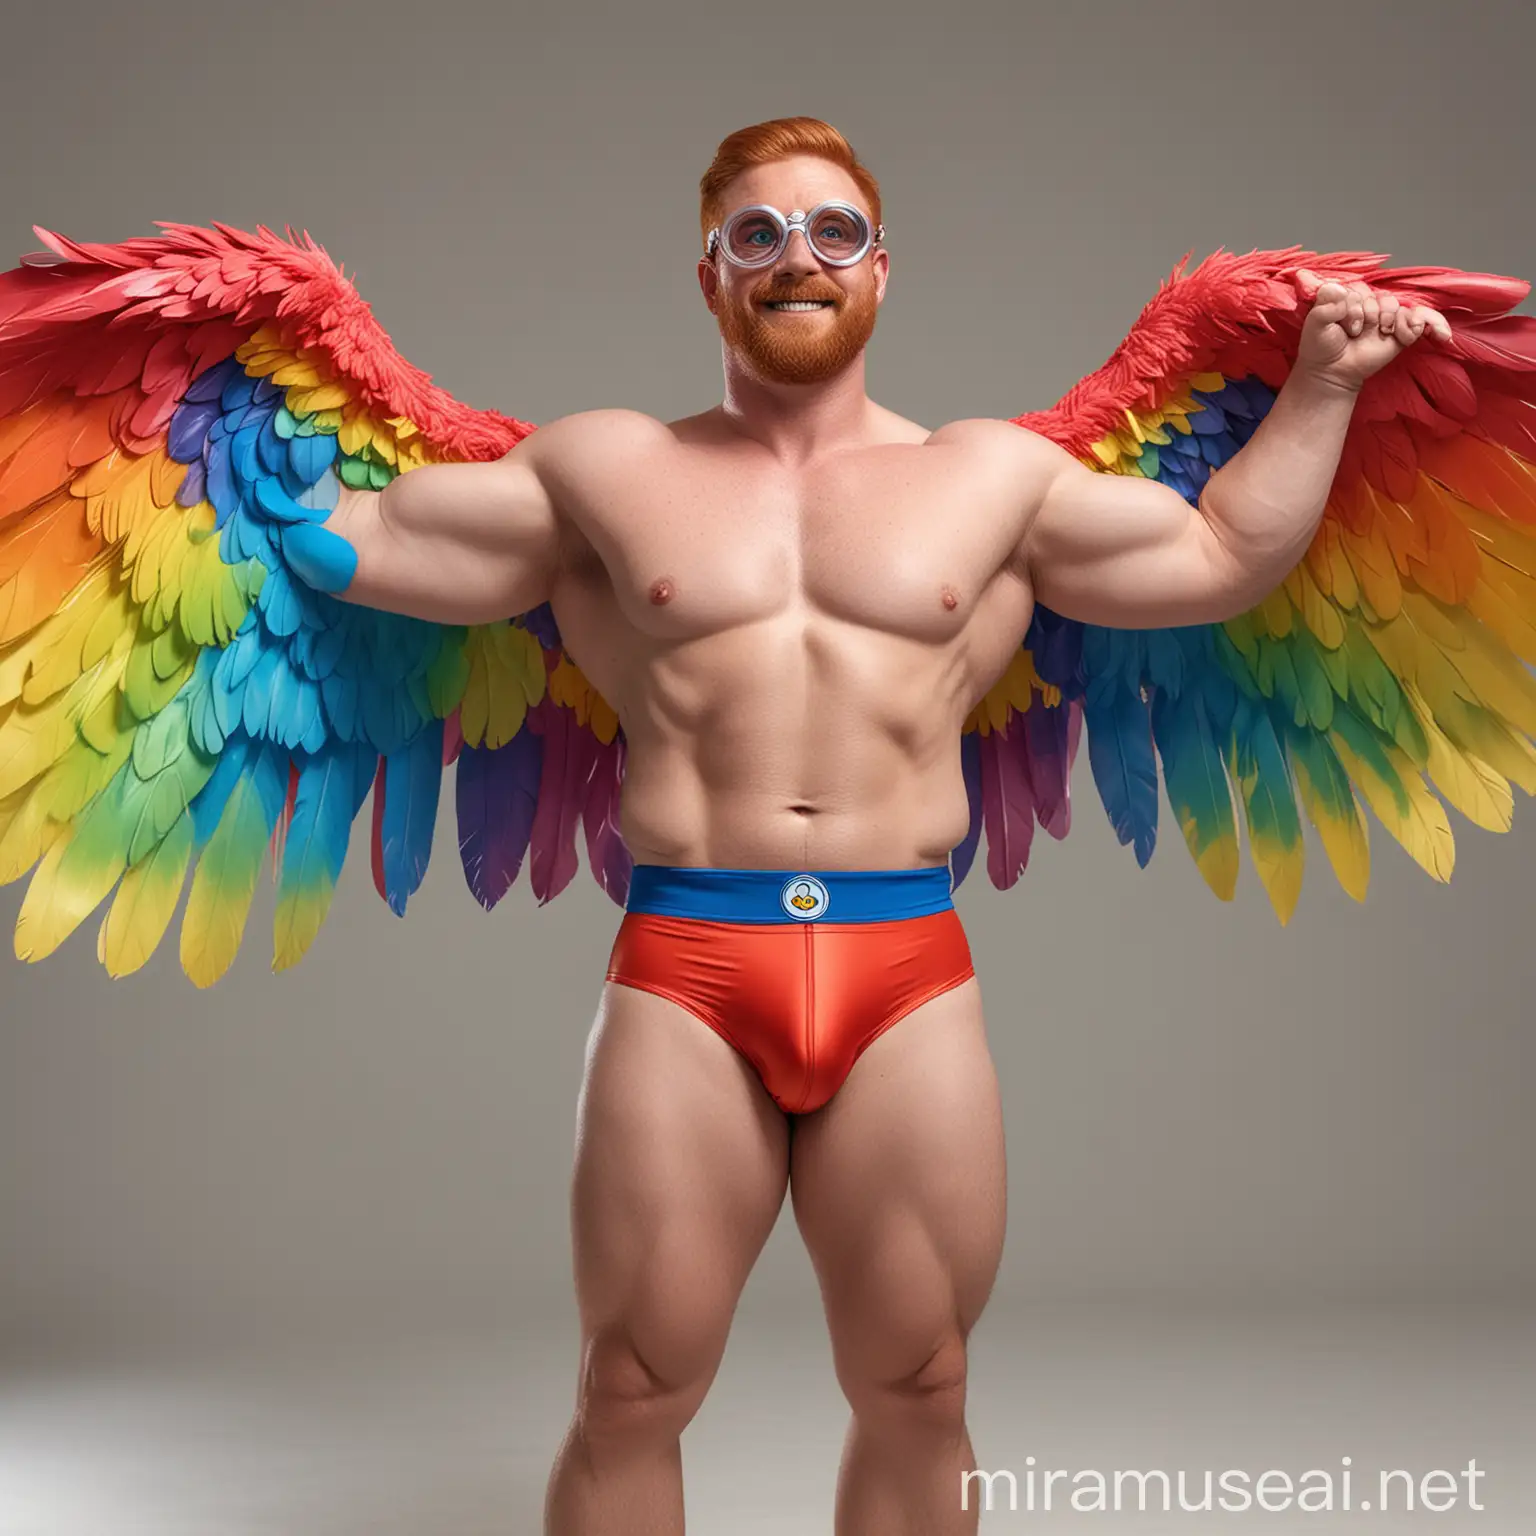 40s Red Head Bodybuilder Flexing in Rainbow Eagle Wings Jacket